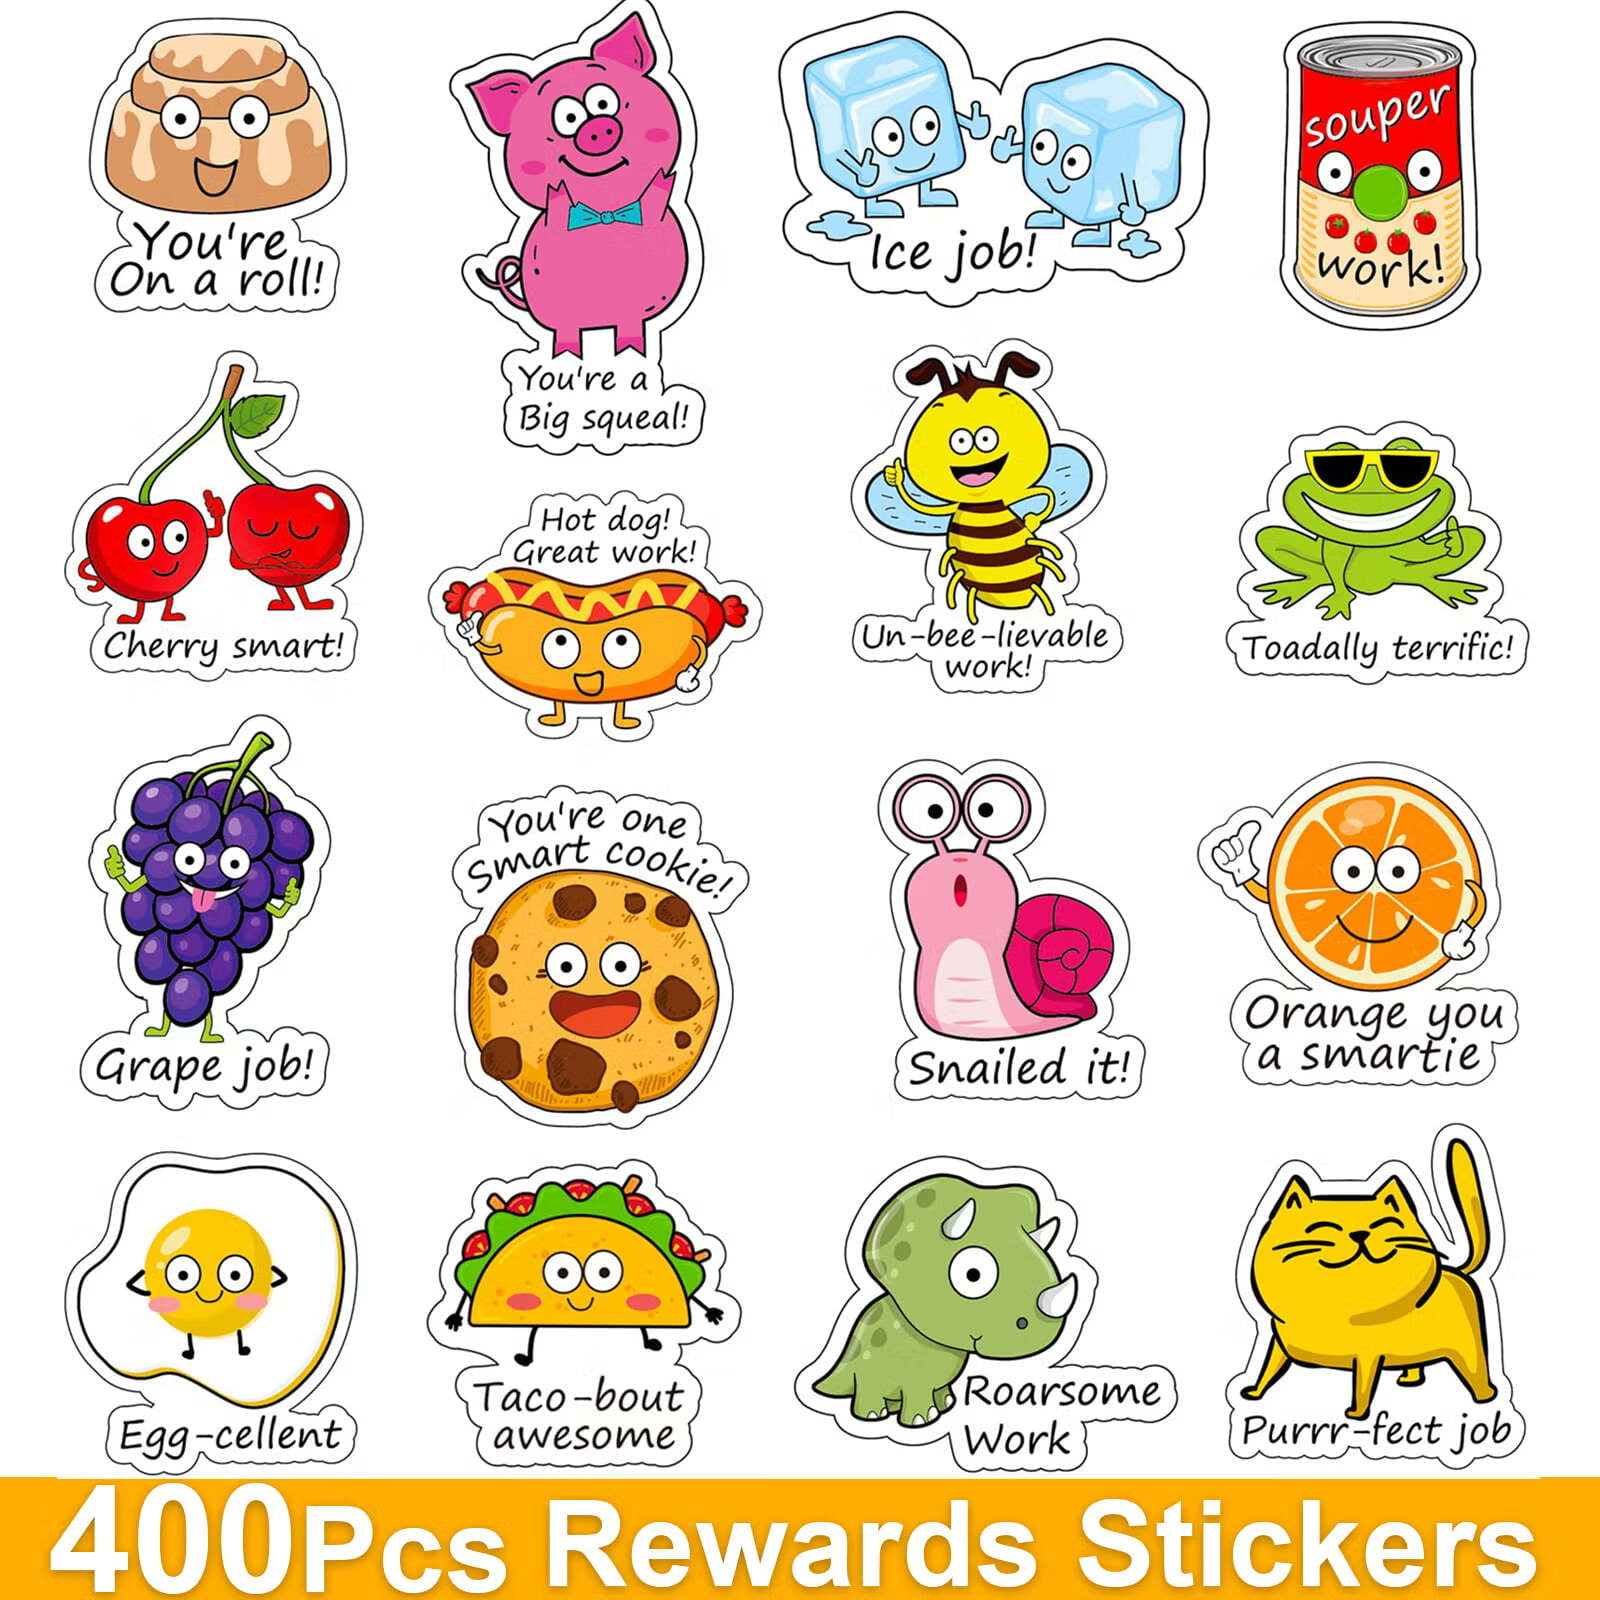 Sweet Honey Bee Stickers (25 pcs)